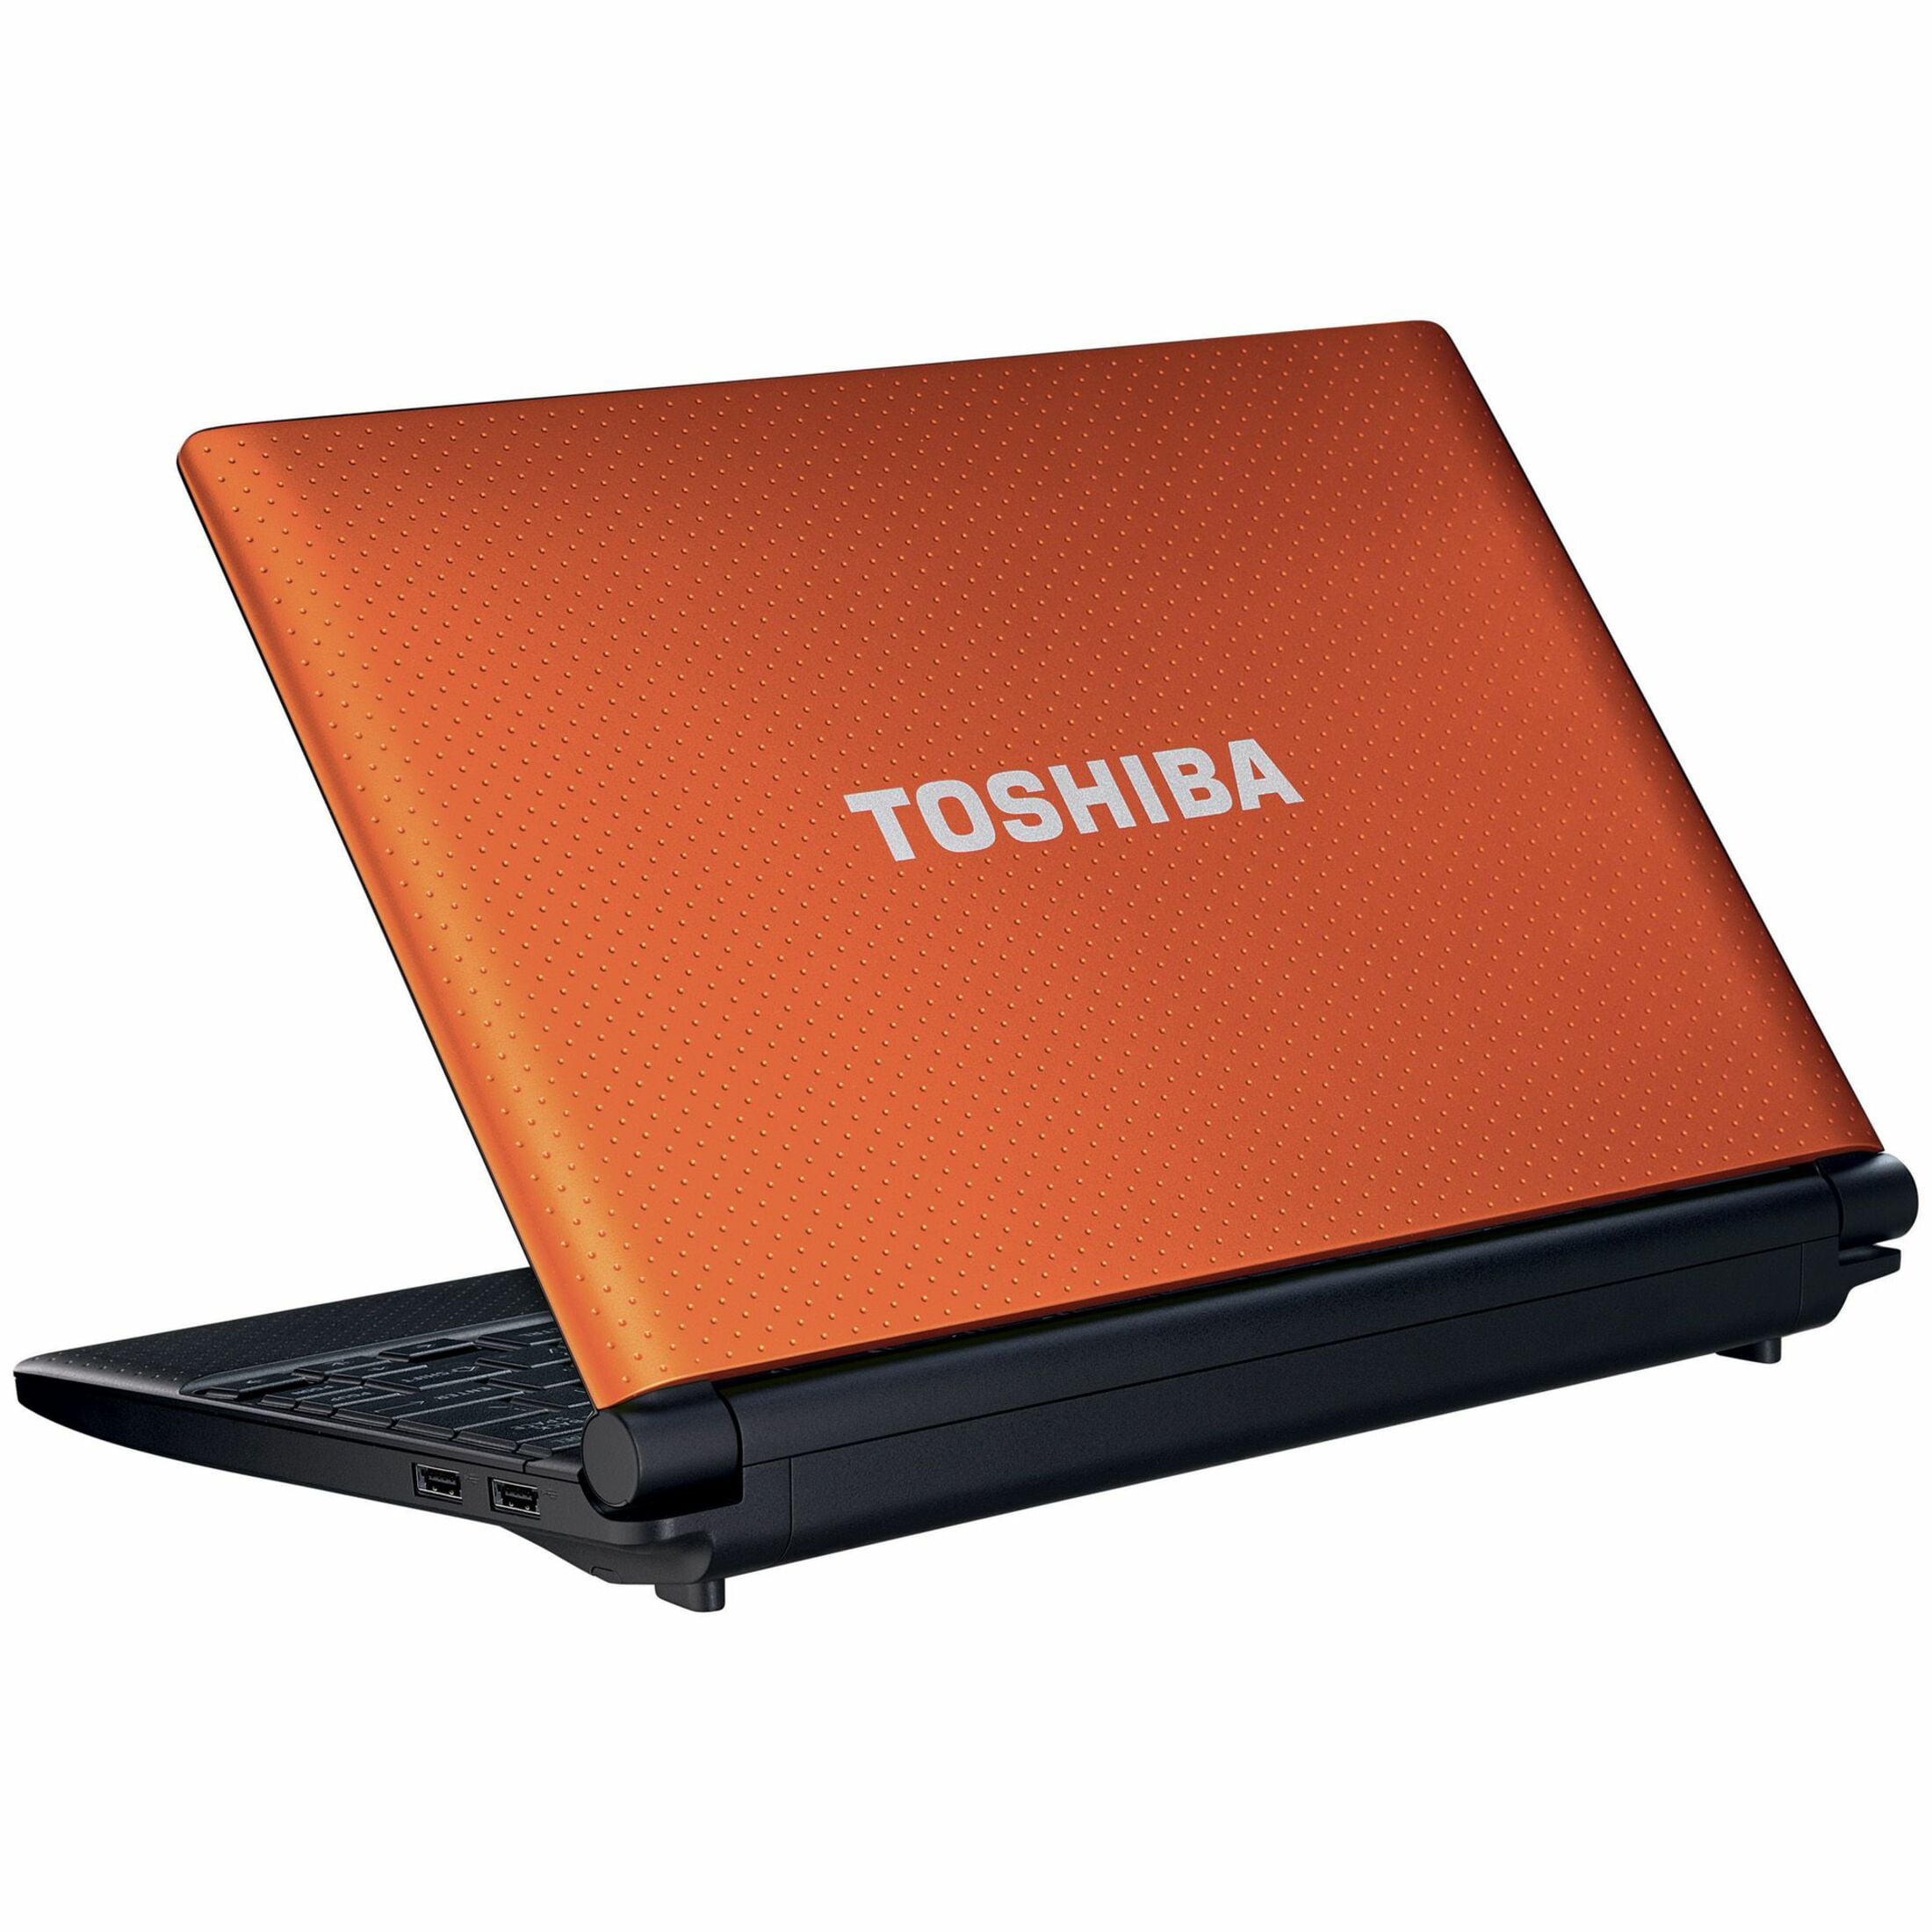 Indica lila Locomotief Toshiba Mini 10.1" Netbook, Intel Atom N455, 250GB HD, Windows 7 Starter,  NB505-N508OR - Walmart.com